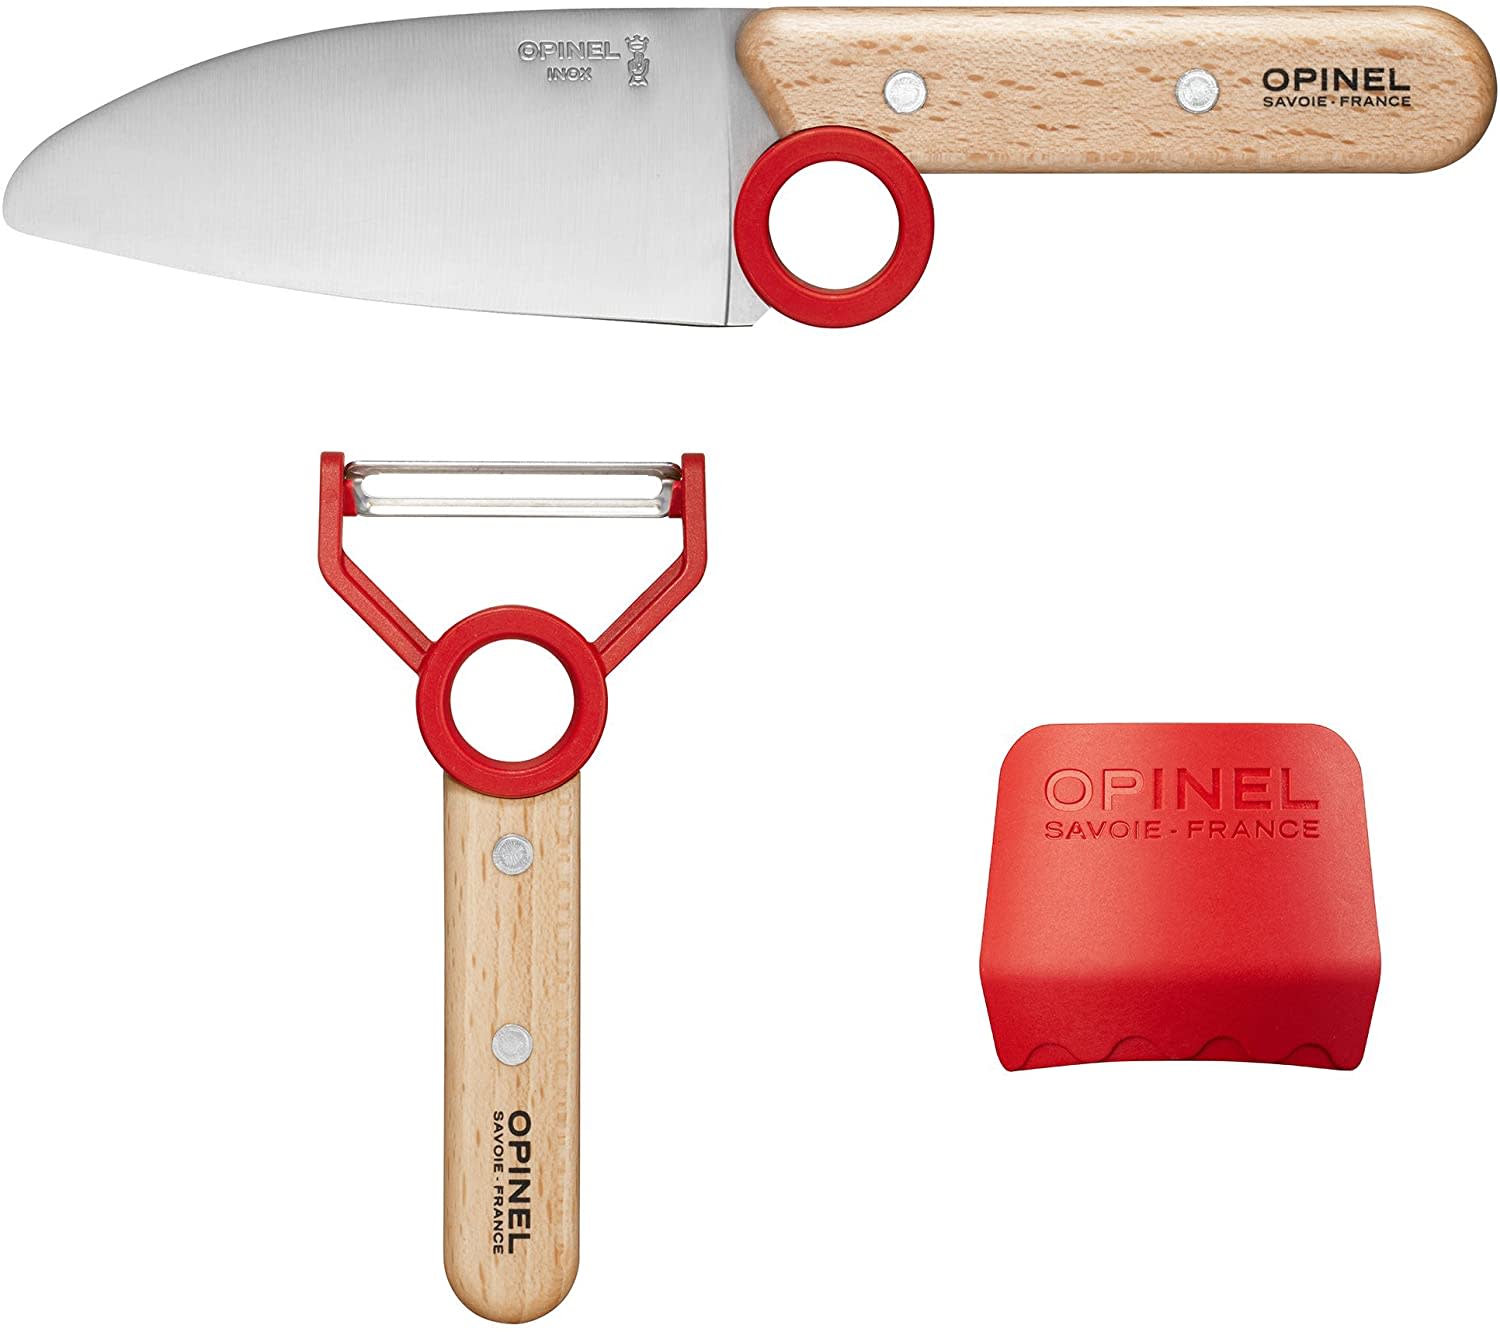 The Culinary Academy 10 Piece Knife Set